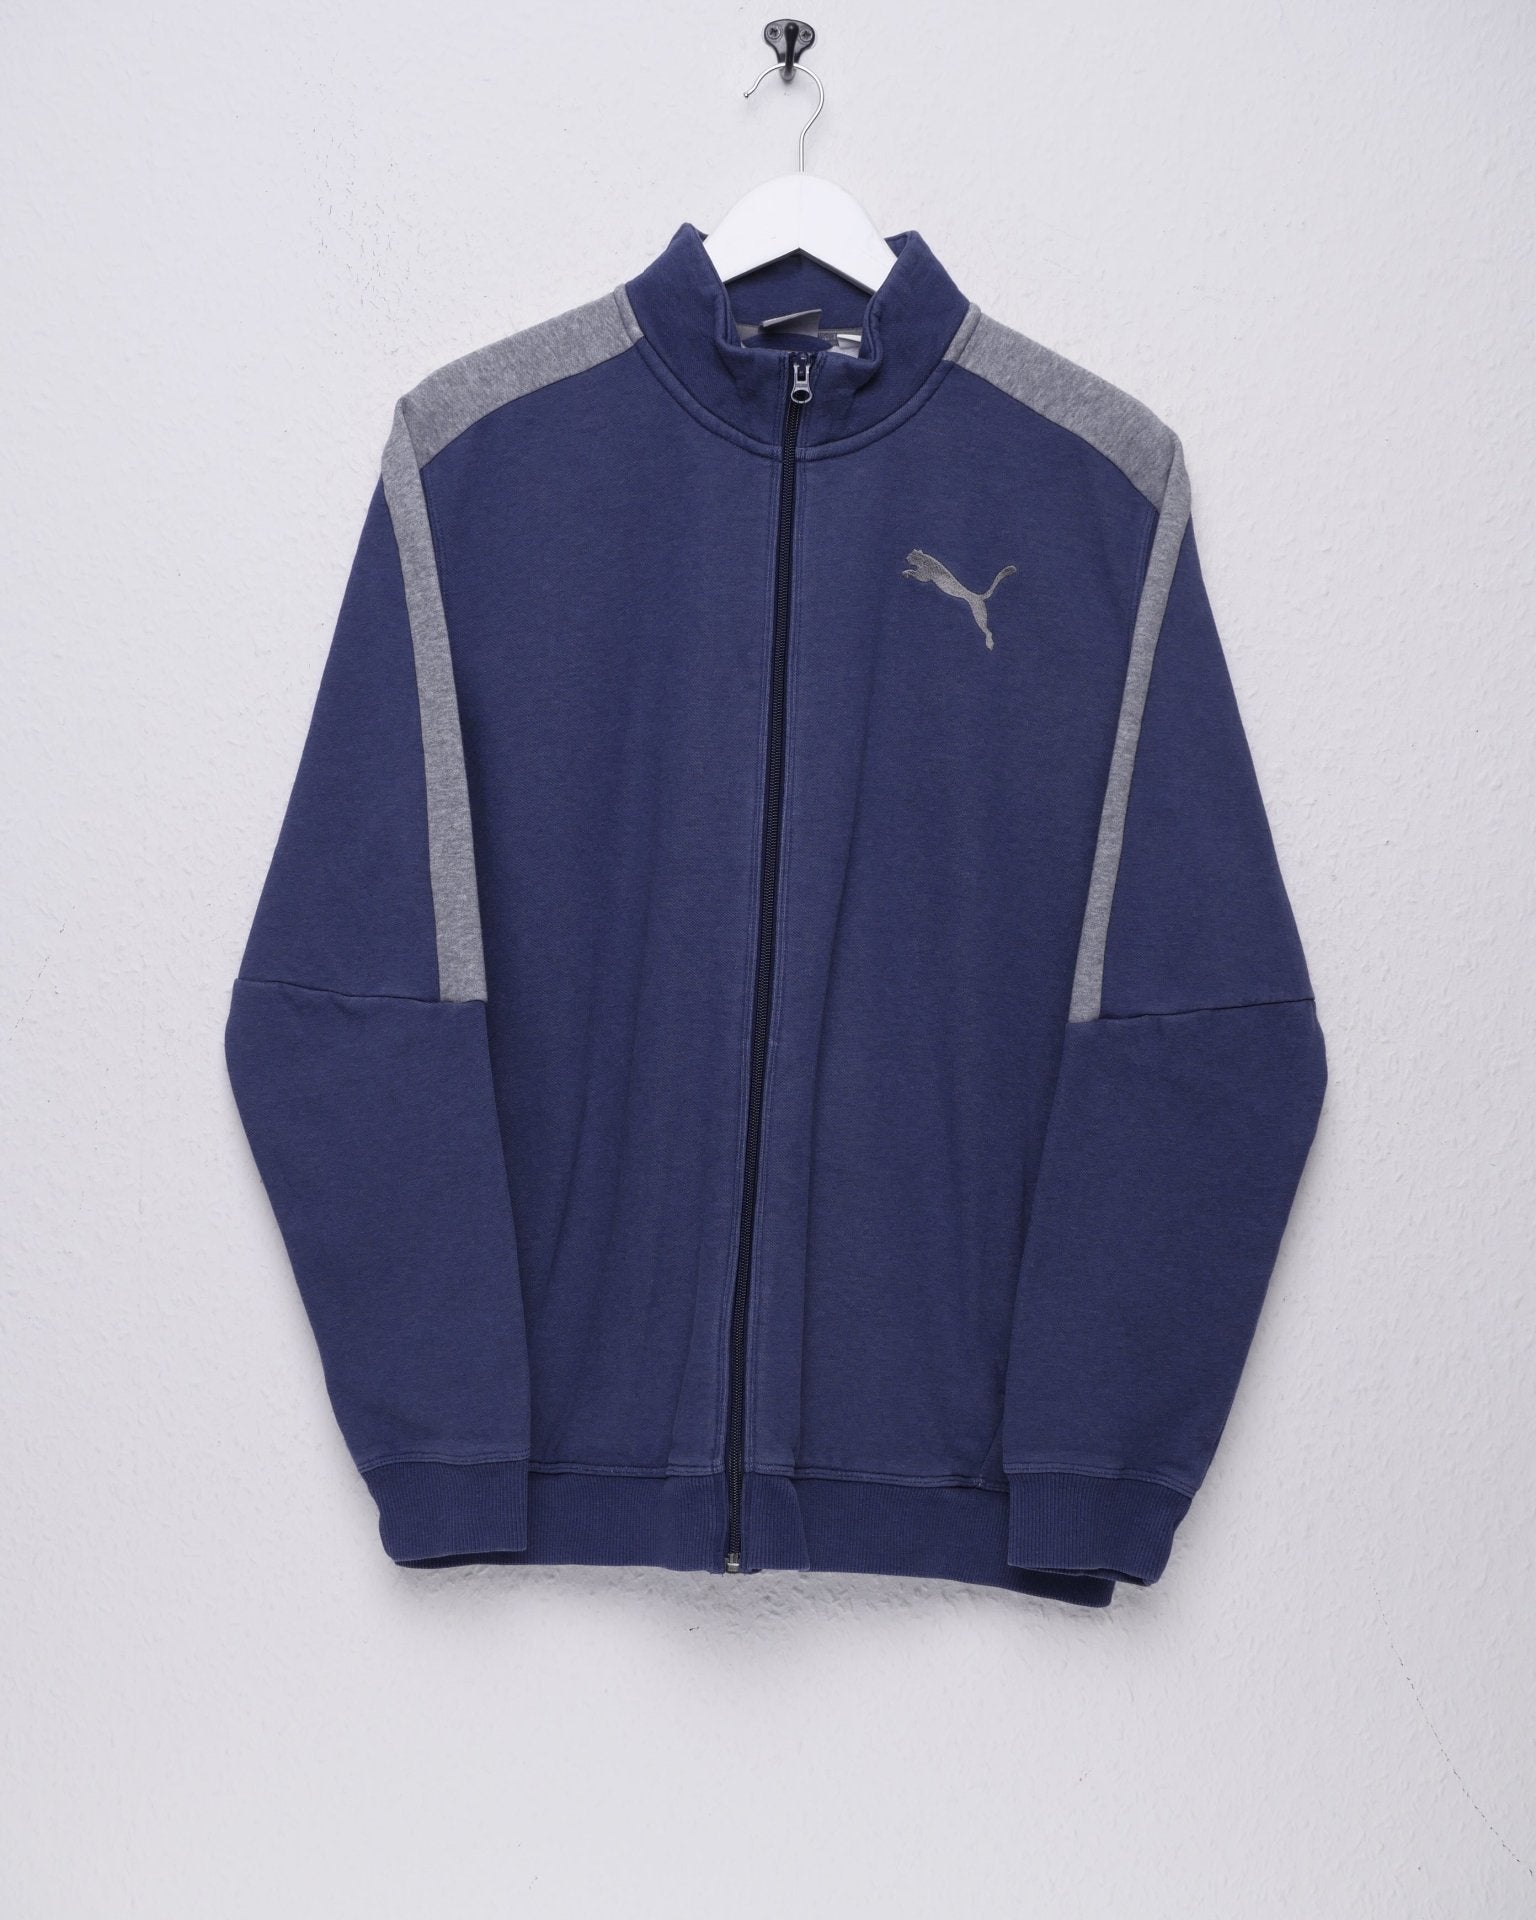 Puma embroidered Logo blue Zip Sweater - Peeces